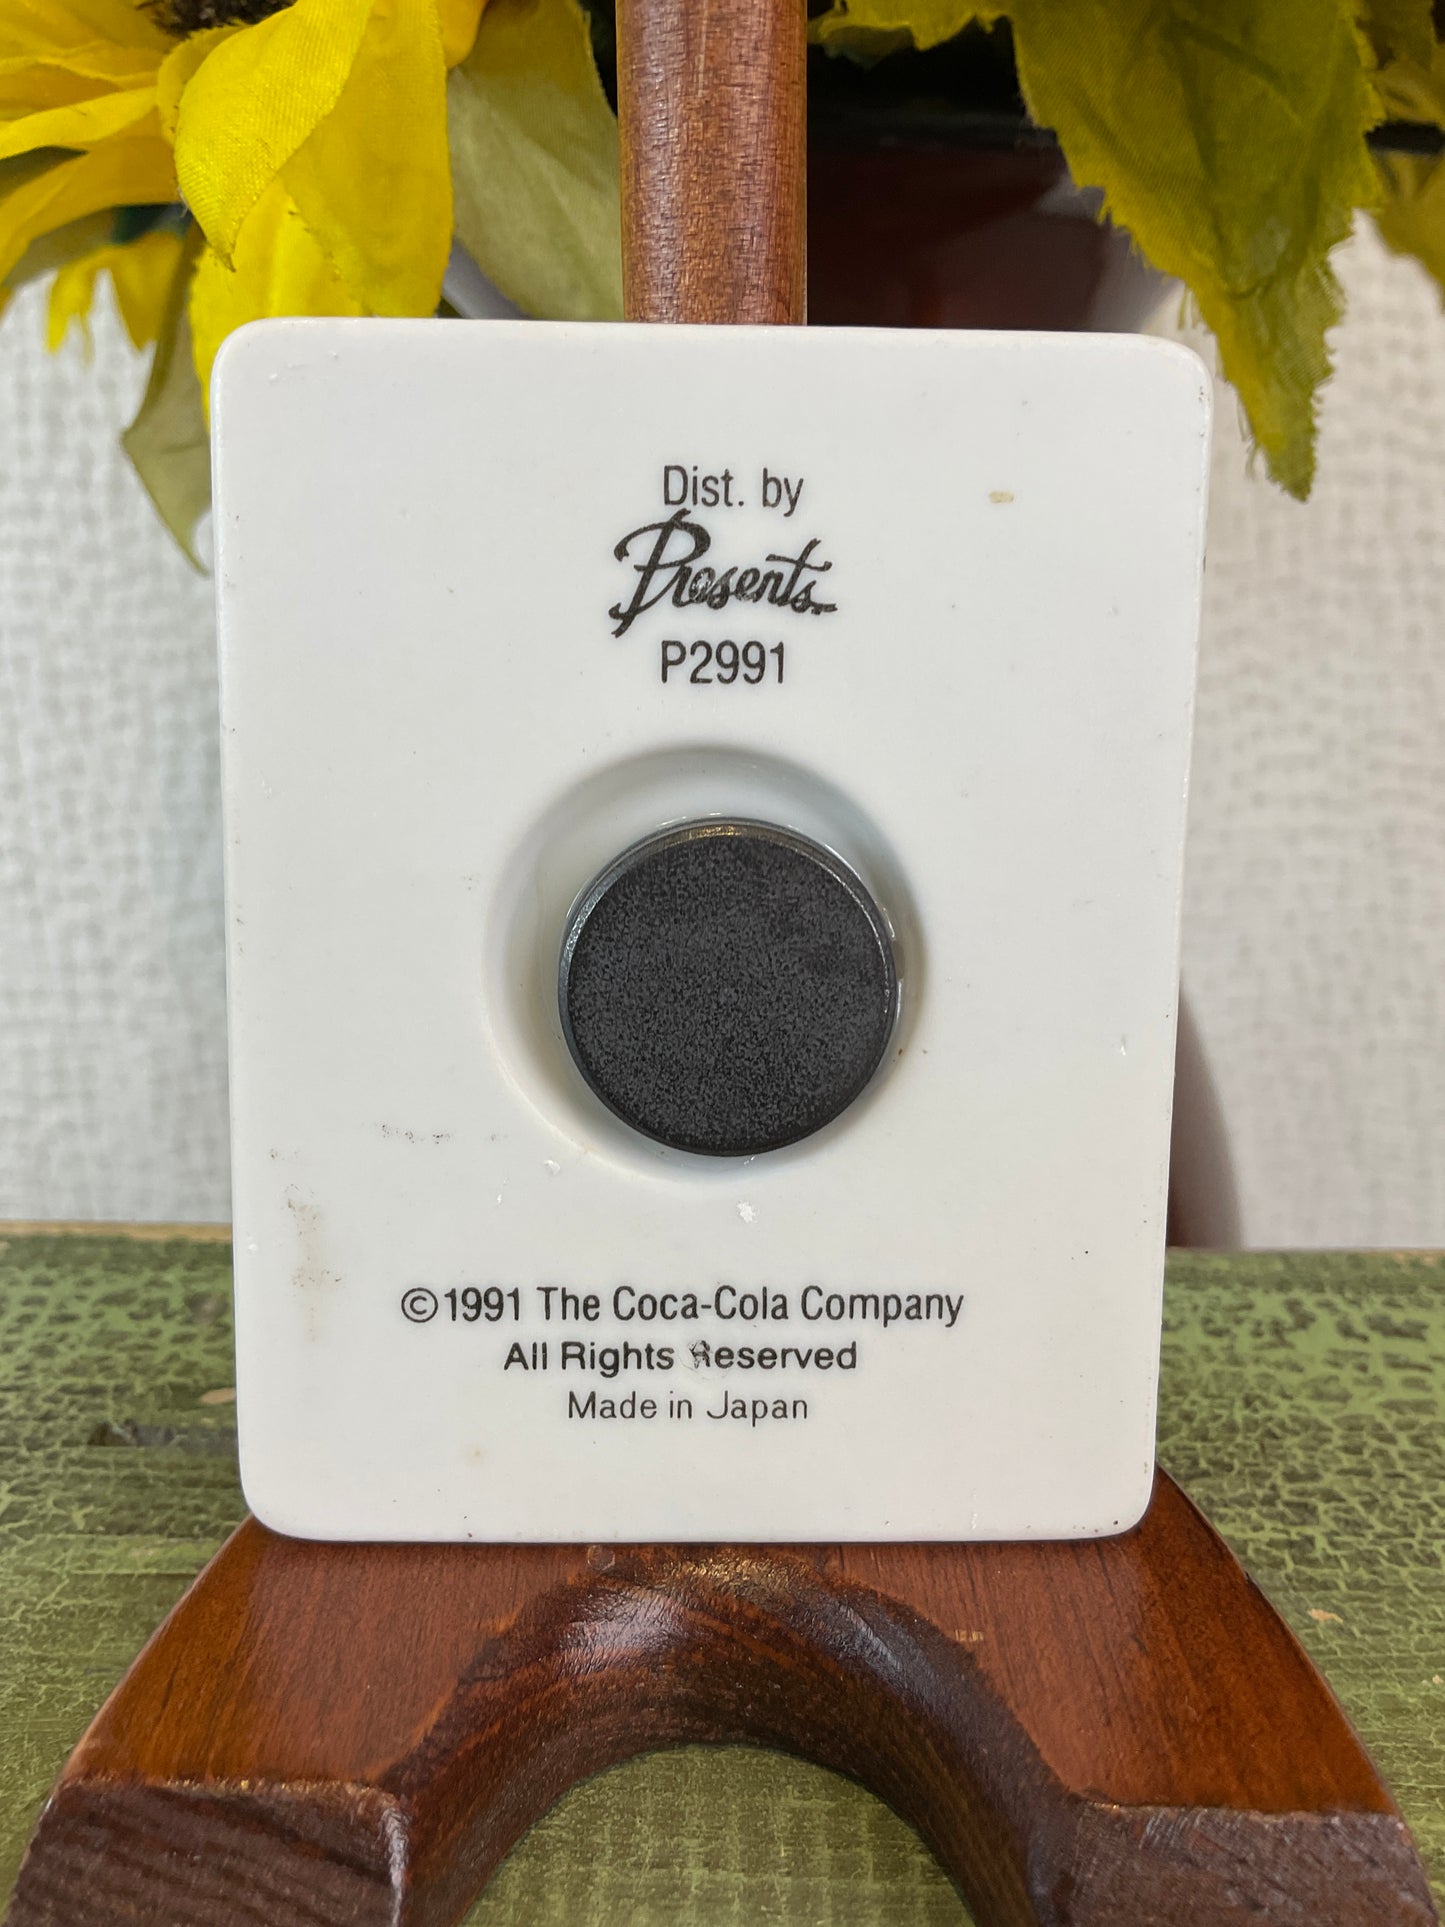 Vintage Coca-Cola Magnets, Sold Separately